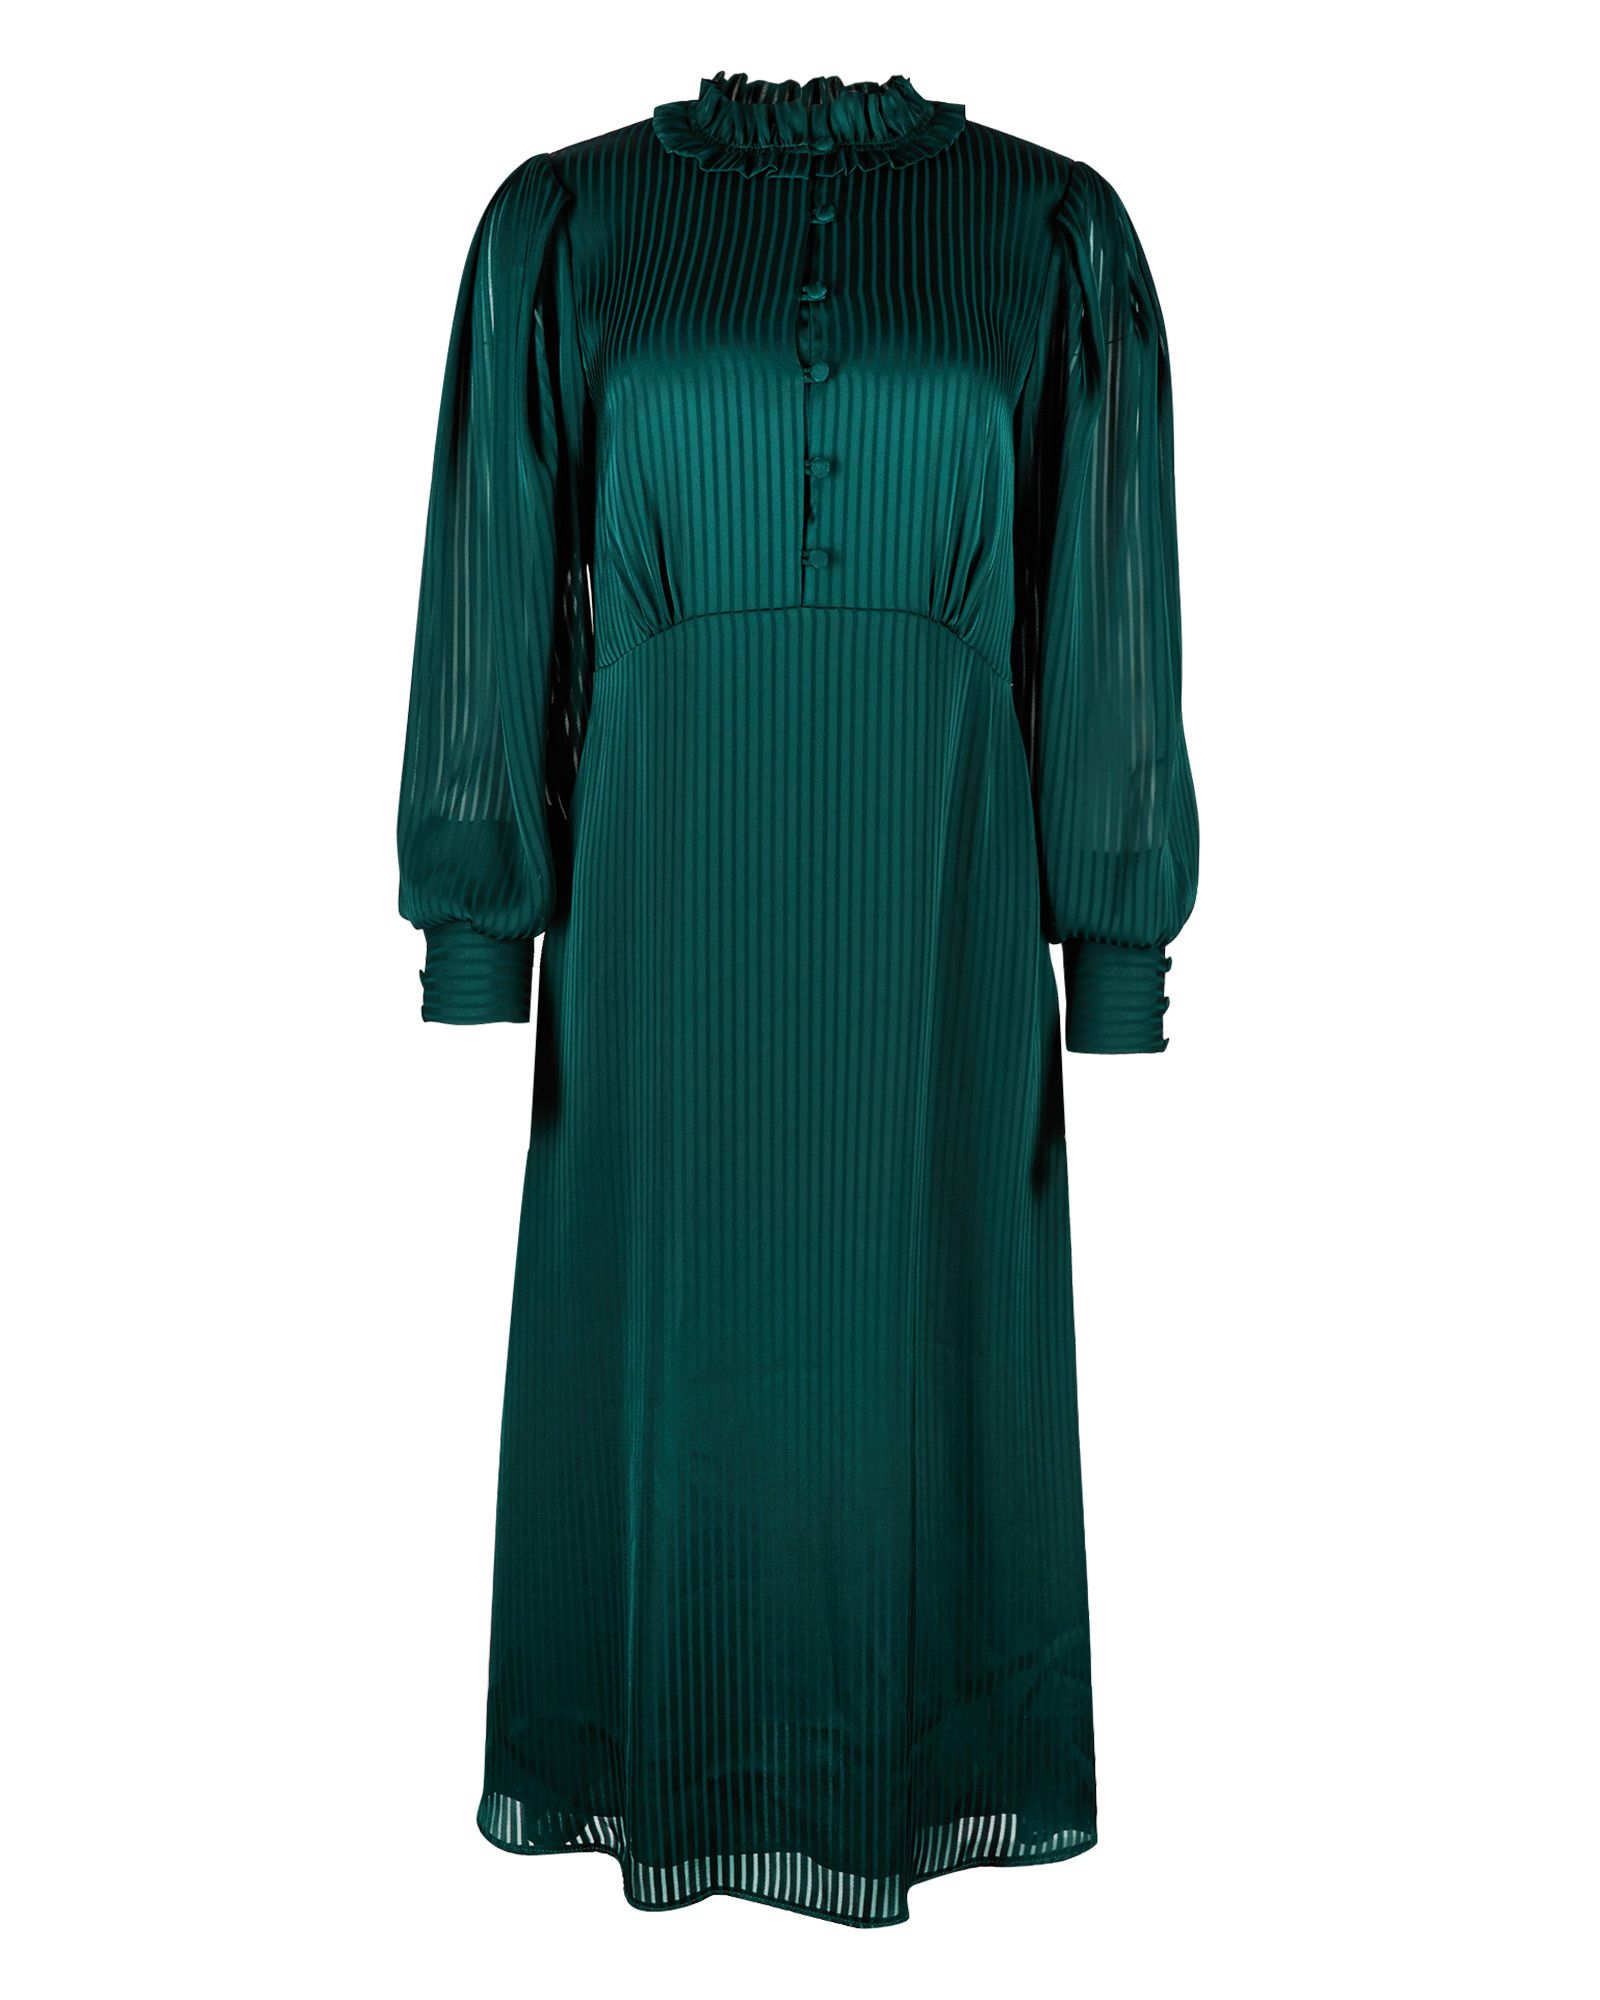 Jacquard Sheer Striped Green Midi Dress | Oliver Bonas